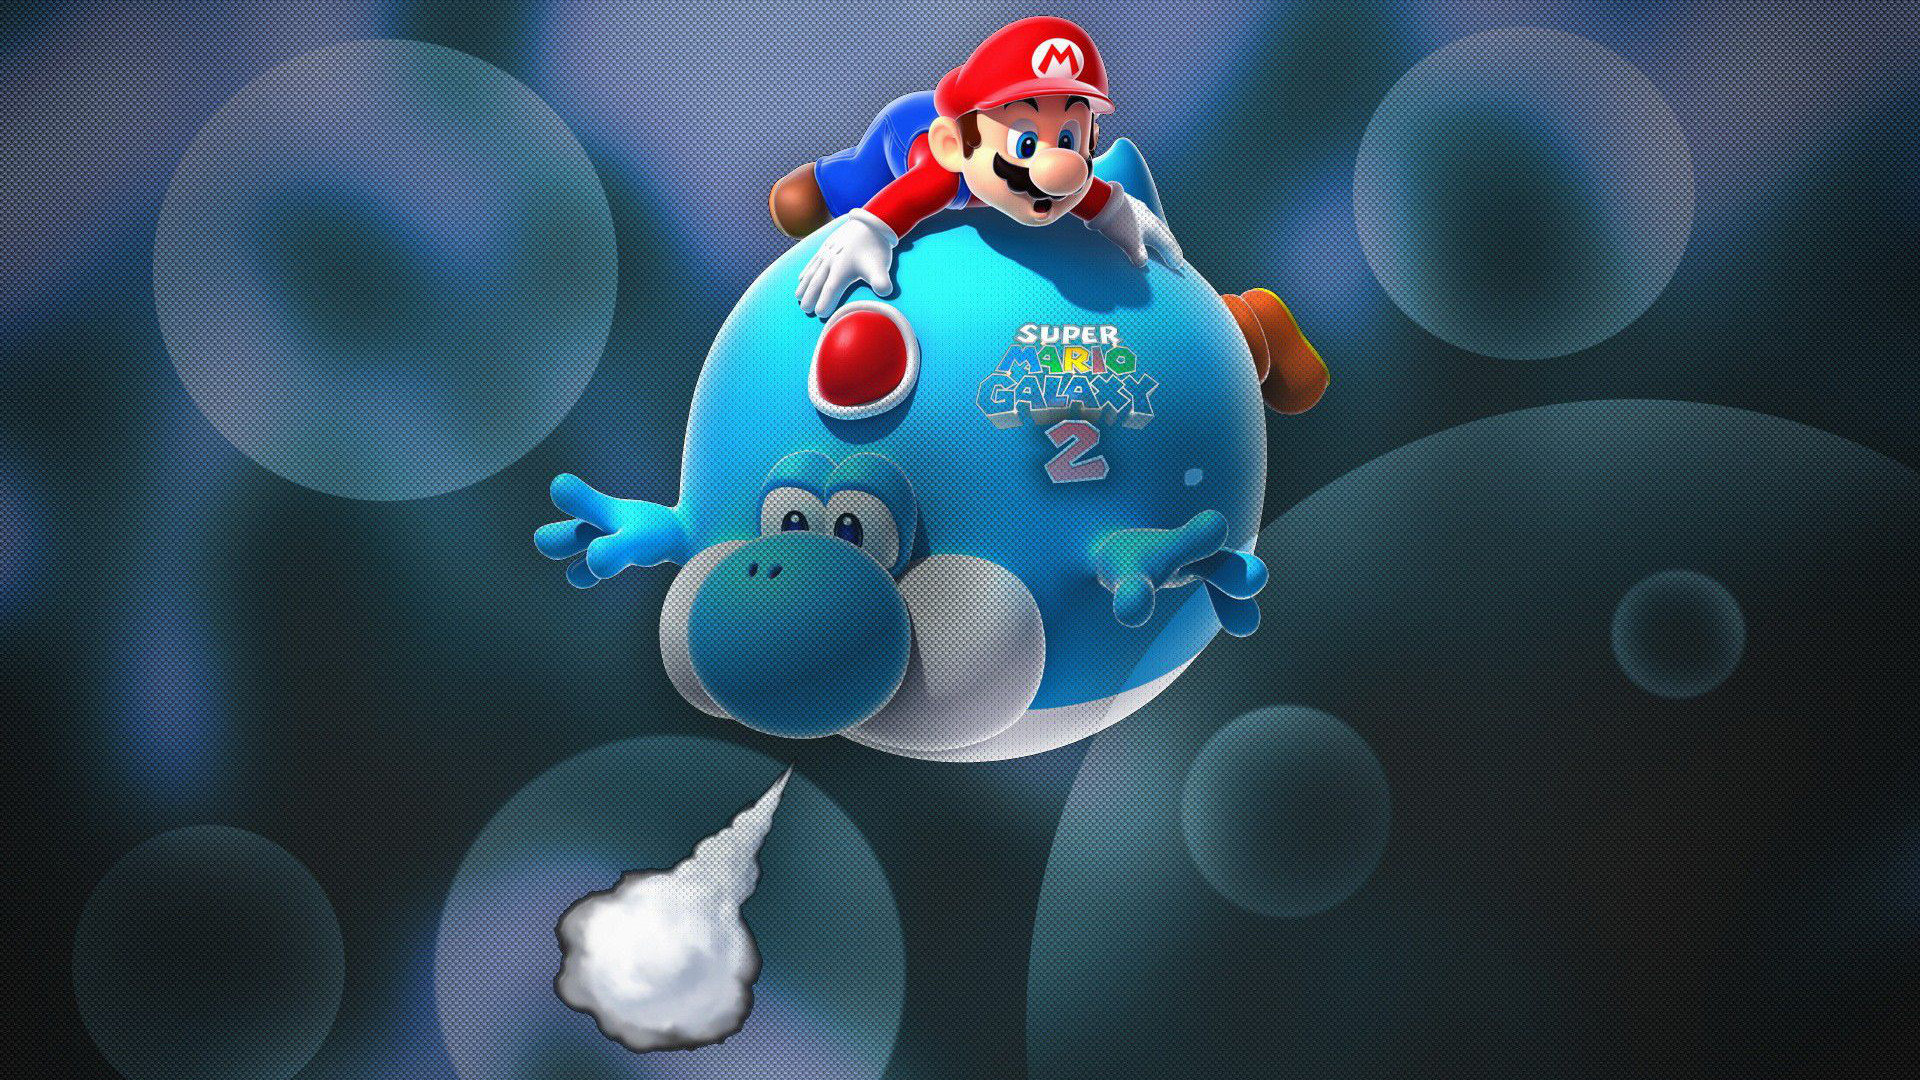 Free Super Mario Galaxy 2 high quality wallpaper ID:7750 for full hd 1920x1080 desktop